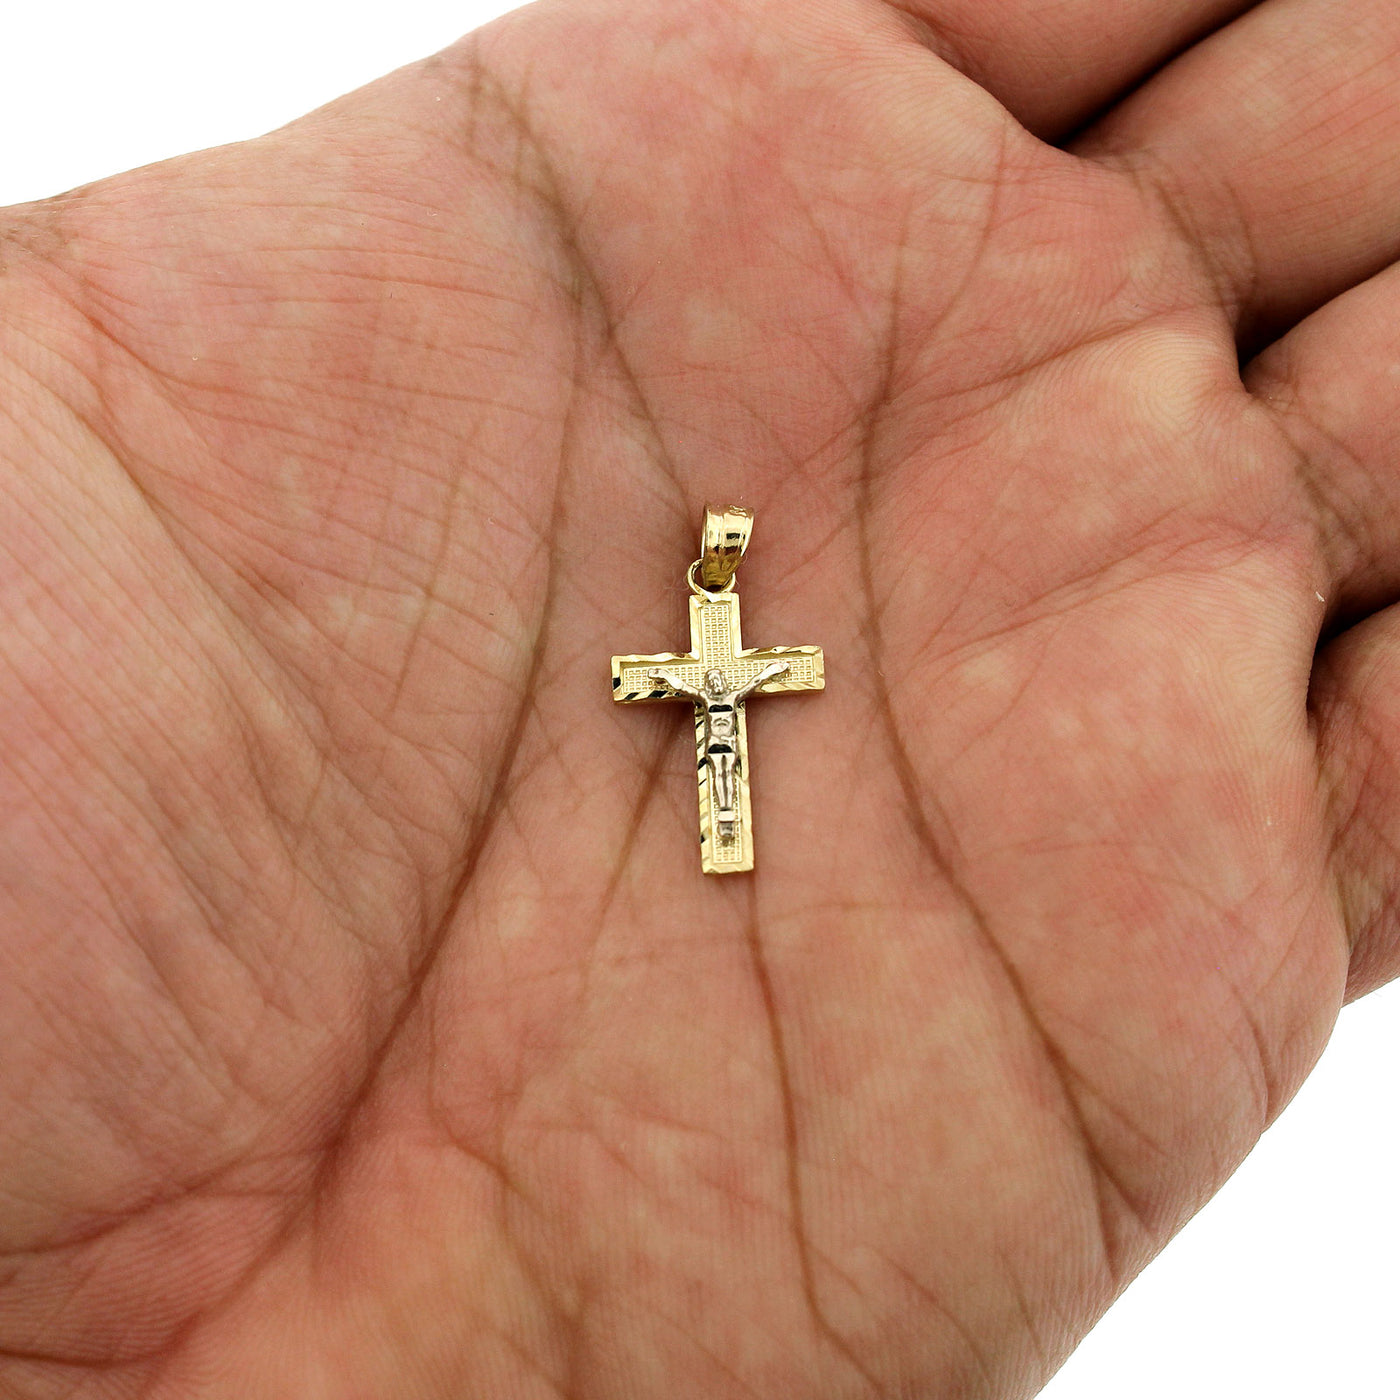 10K Real Yellow Gold Diamond Cut Jesus Crucifix Cross Pendant & 2.5mm Rope Chain Necklace Set